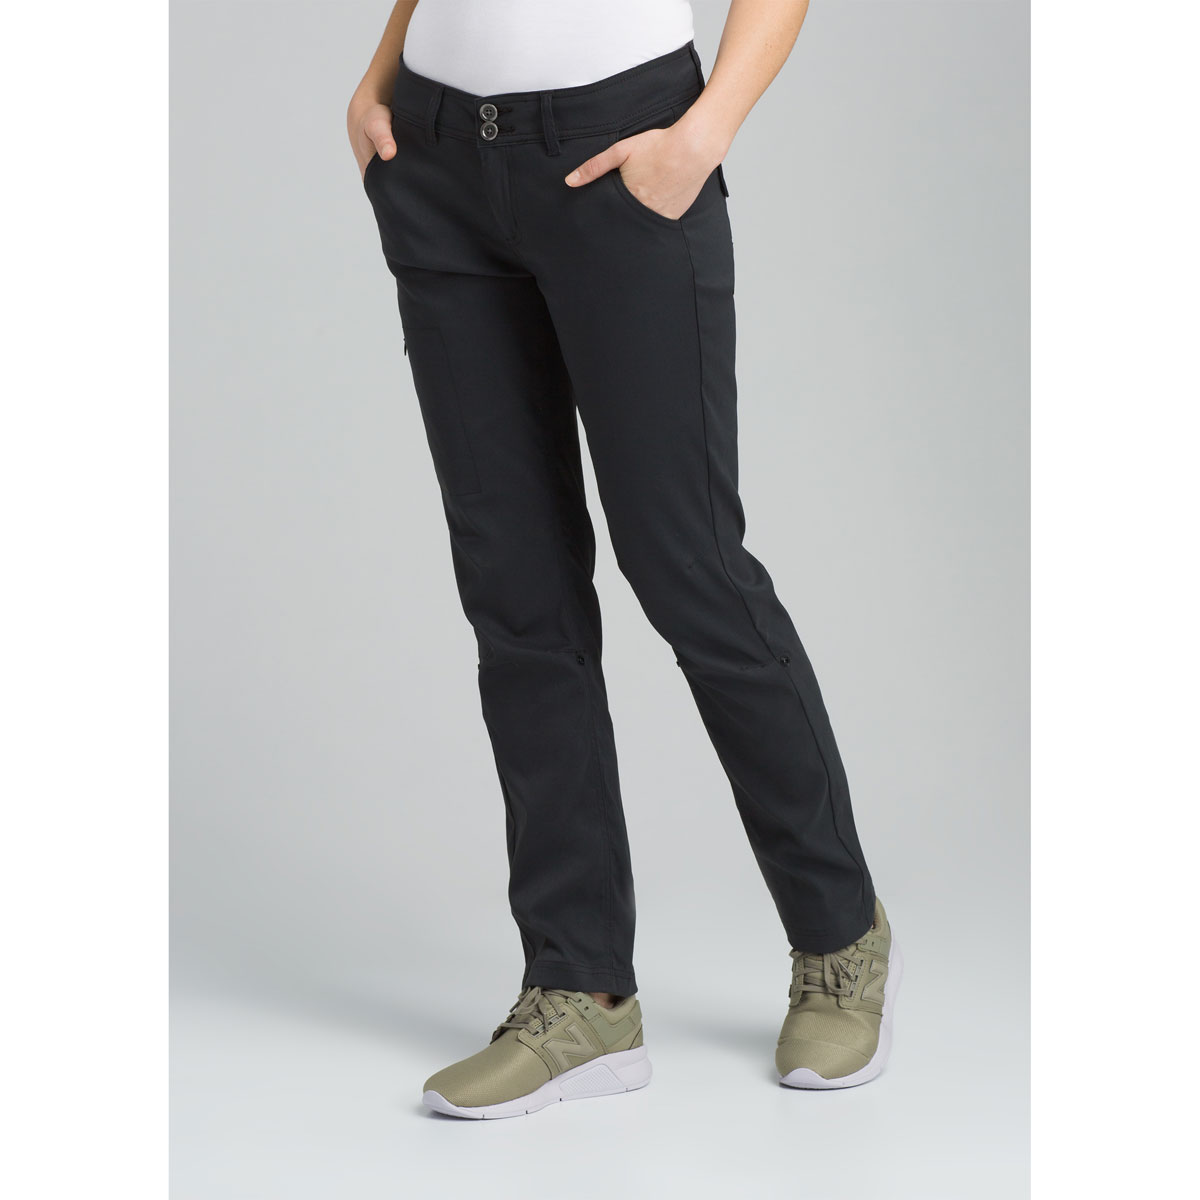 PrAna Women's Pants Size 8 Hallena Pant Straight Blue/Gray Outdoor W4118RG09